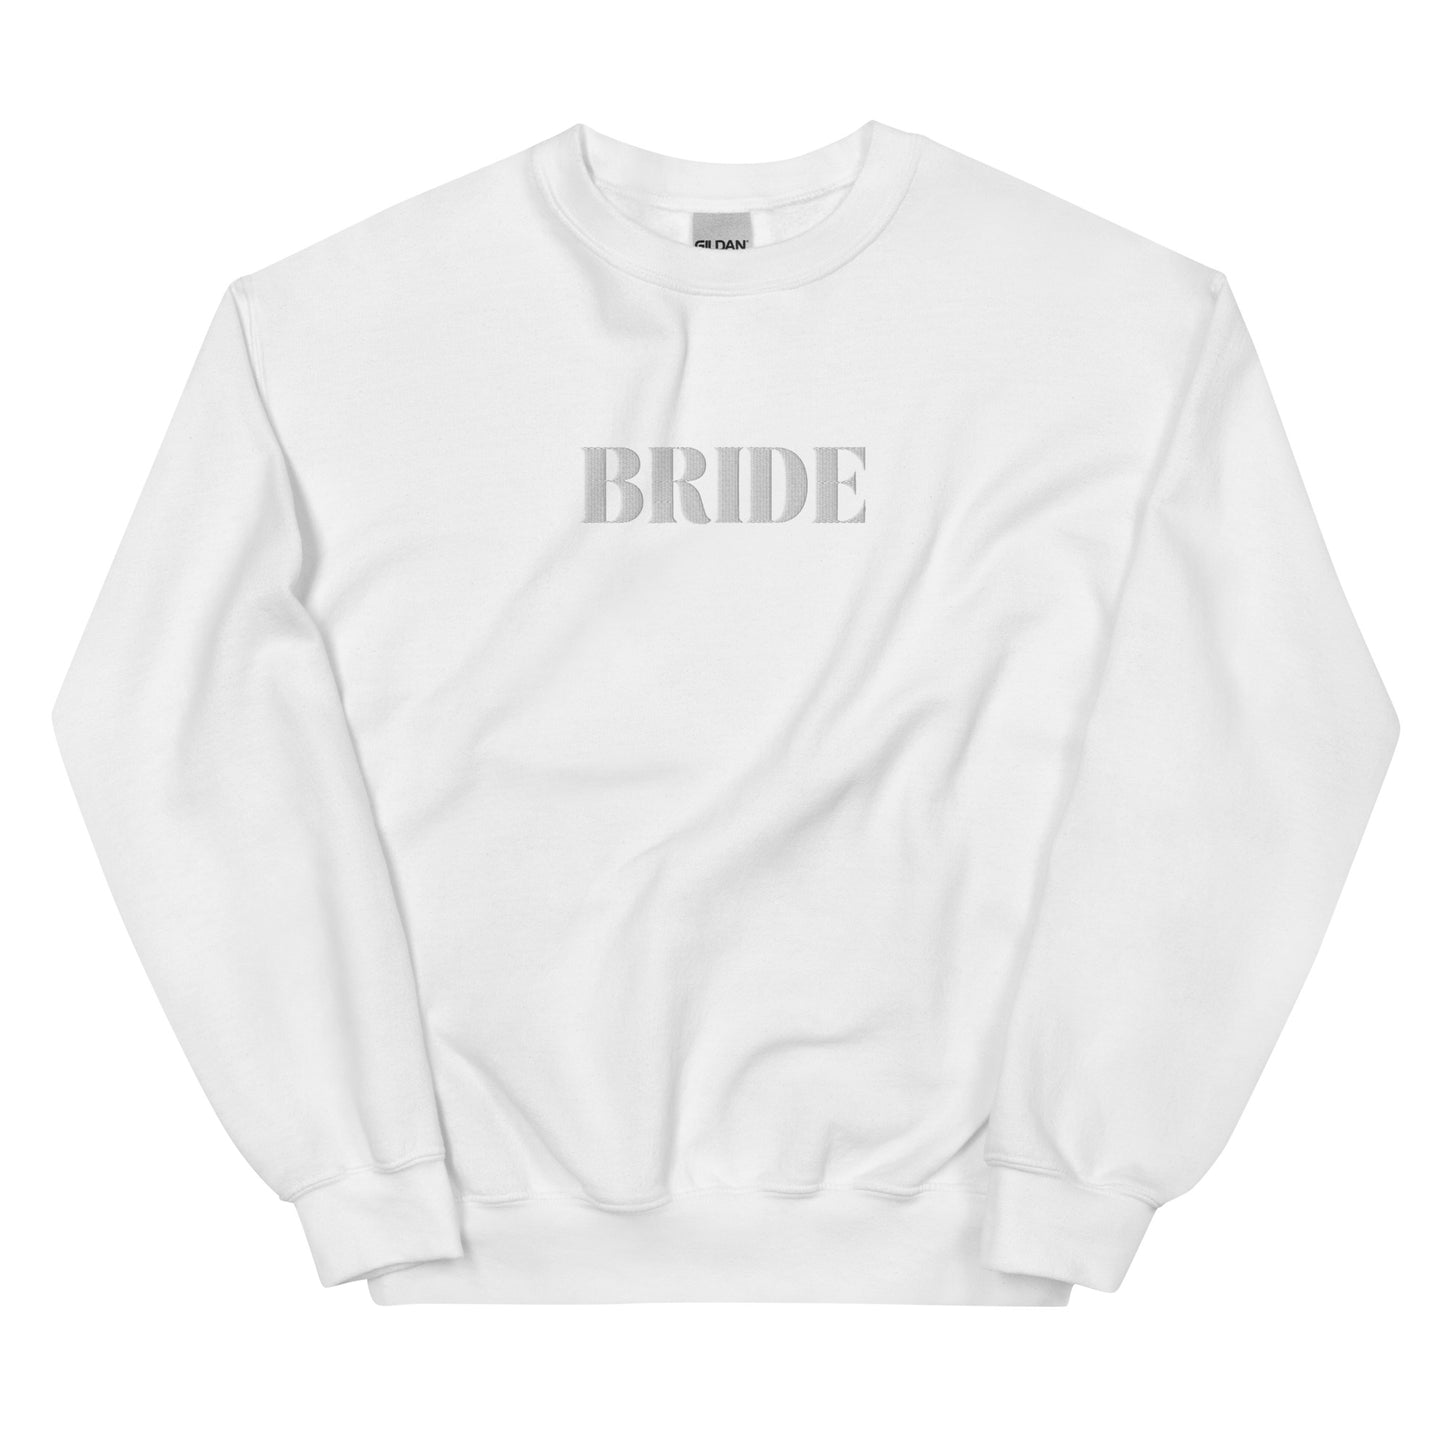 Bride Embroidered Crewneck Sweatshirt